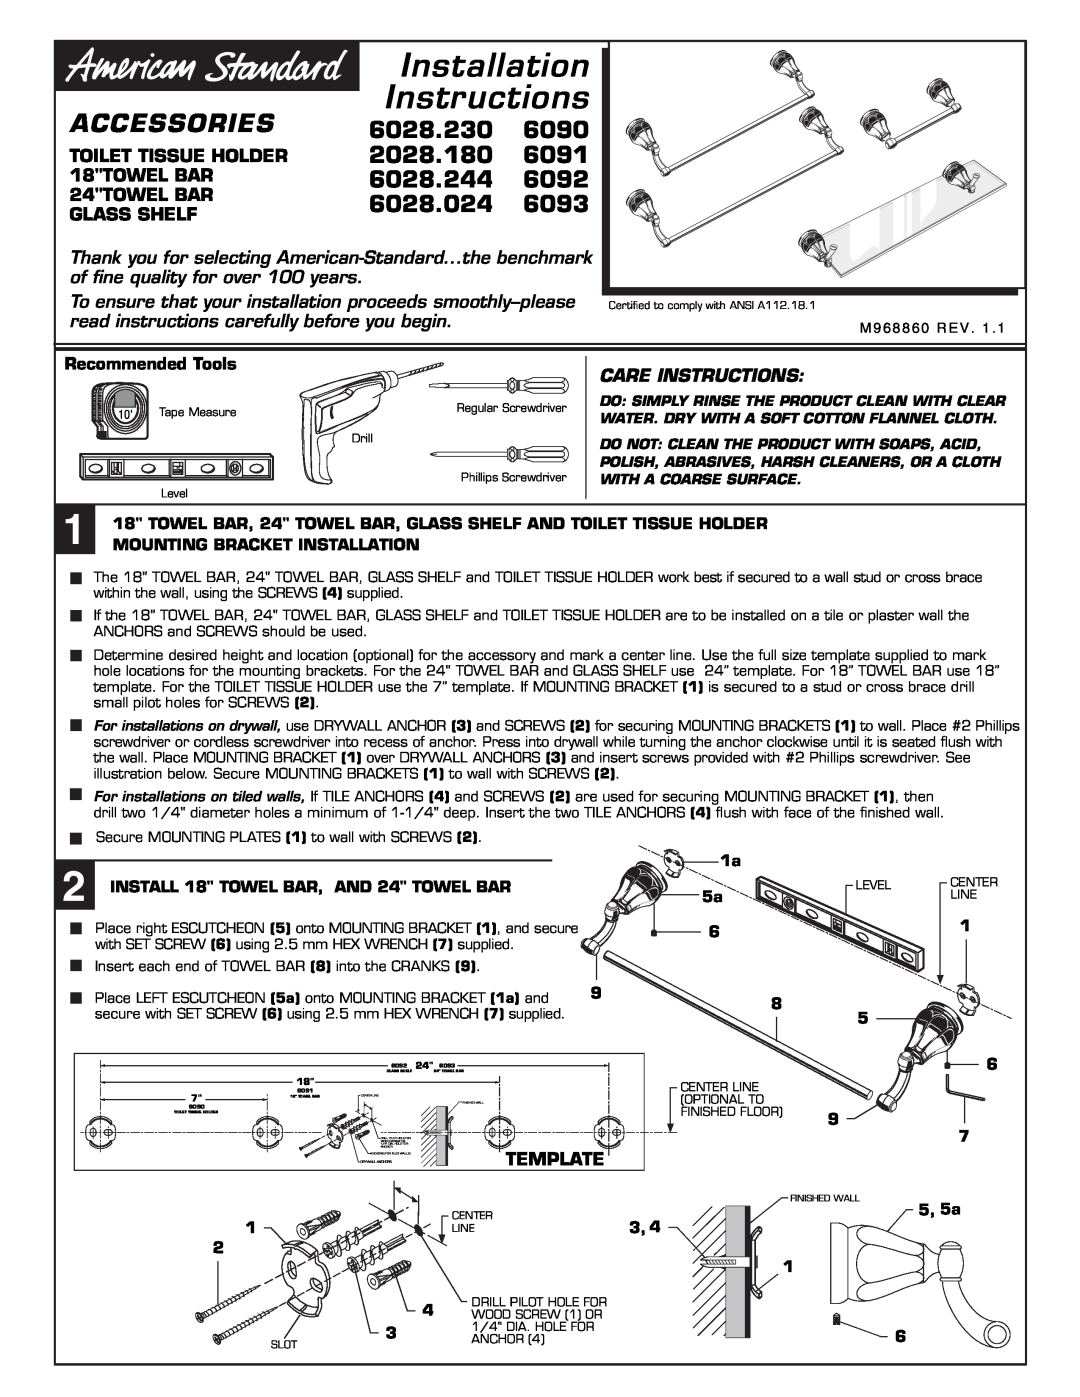 American Standard 6028.244 installation instructions Installation, Instructions, Accessories, 6028.230, 6090, 6028.180 